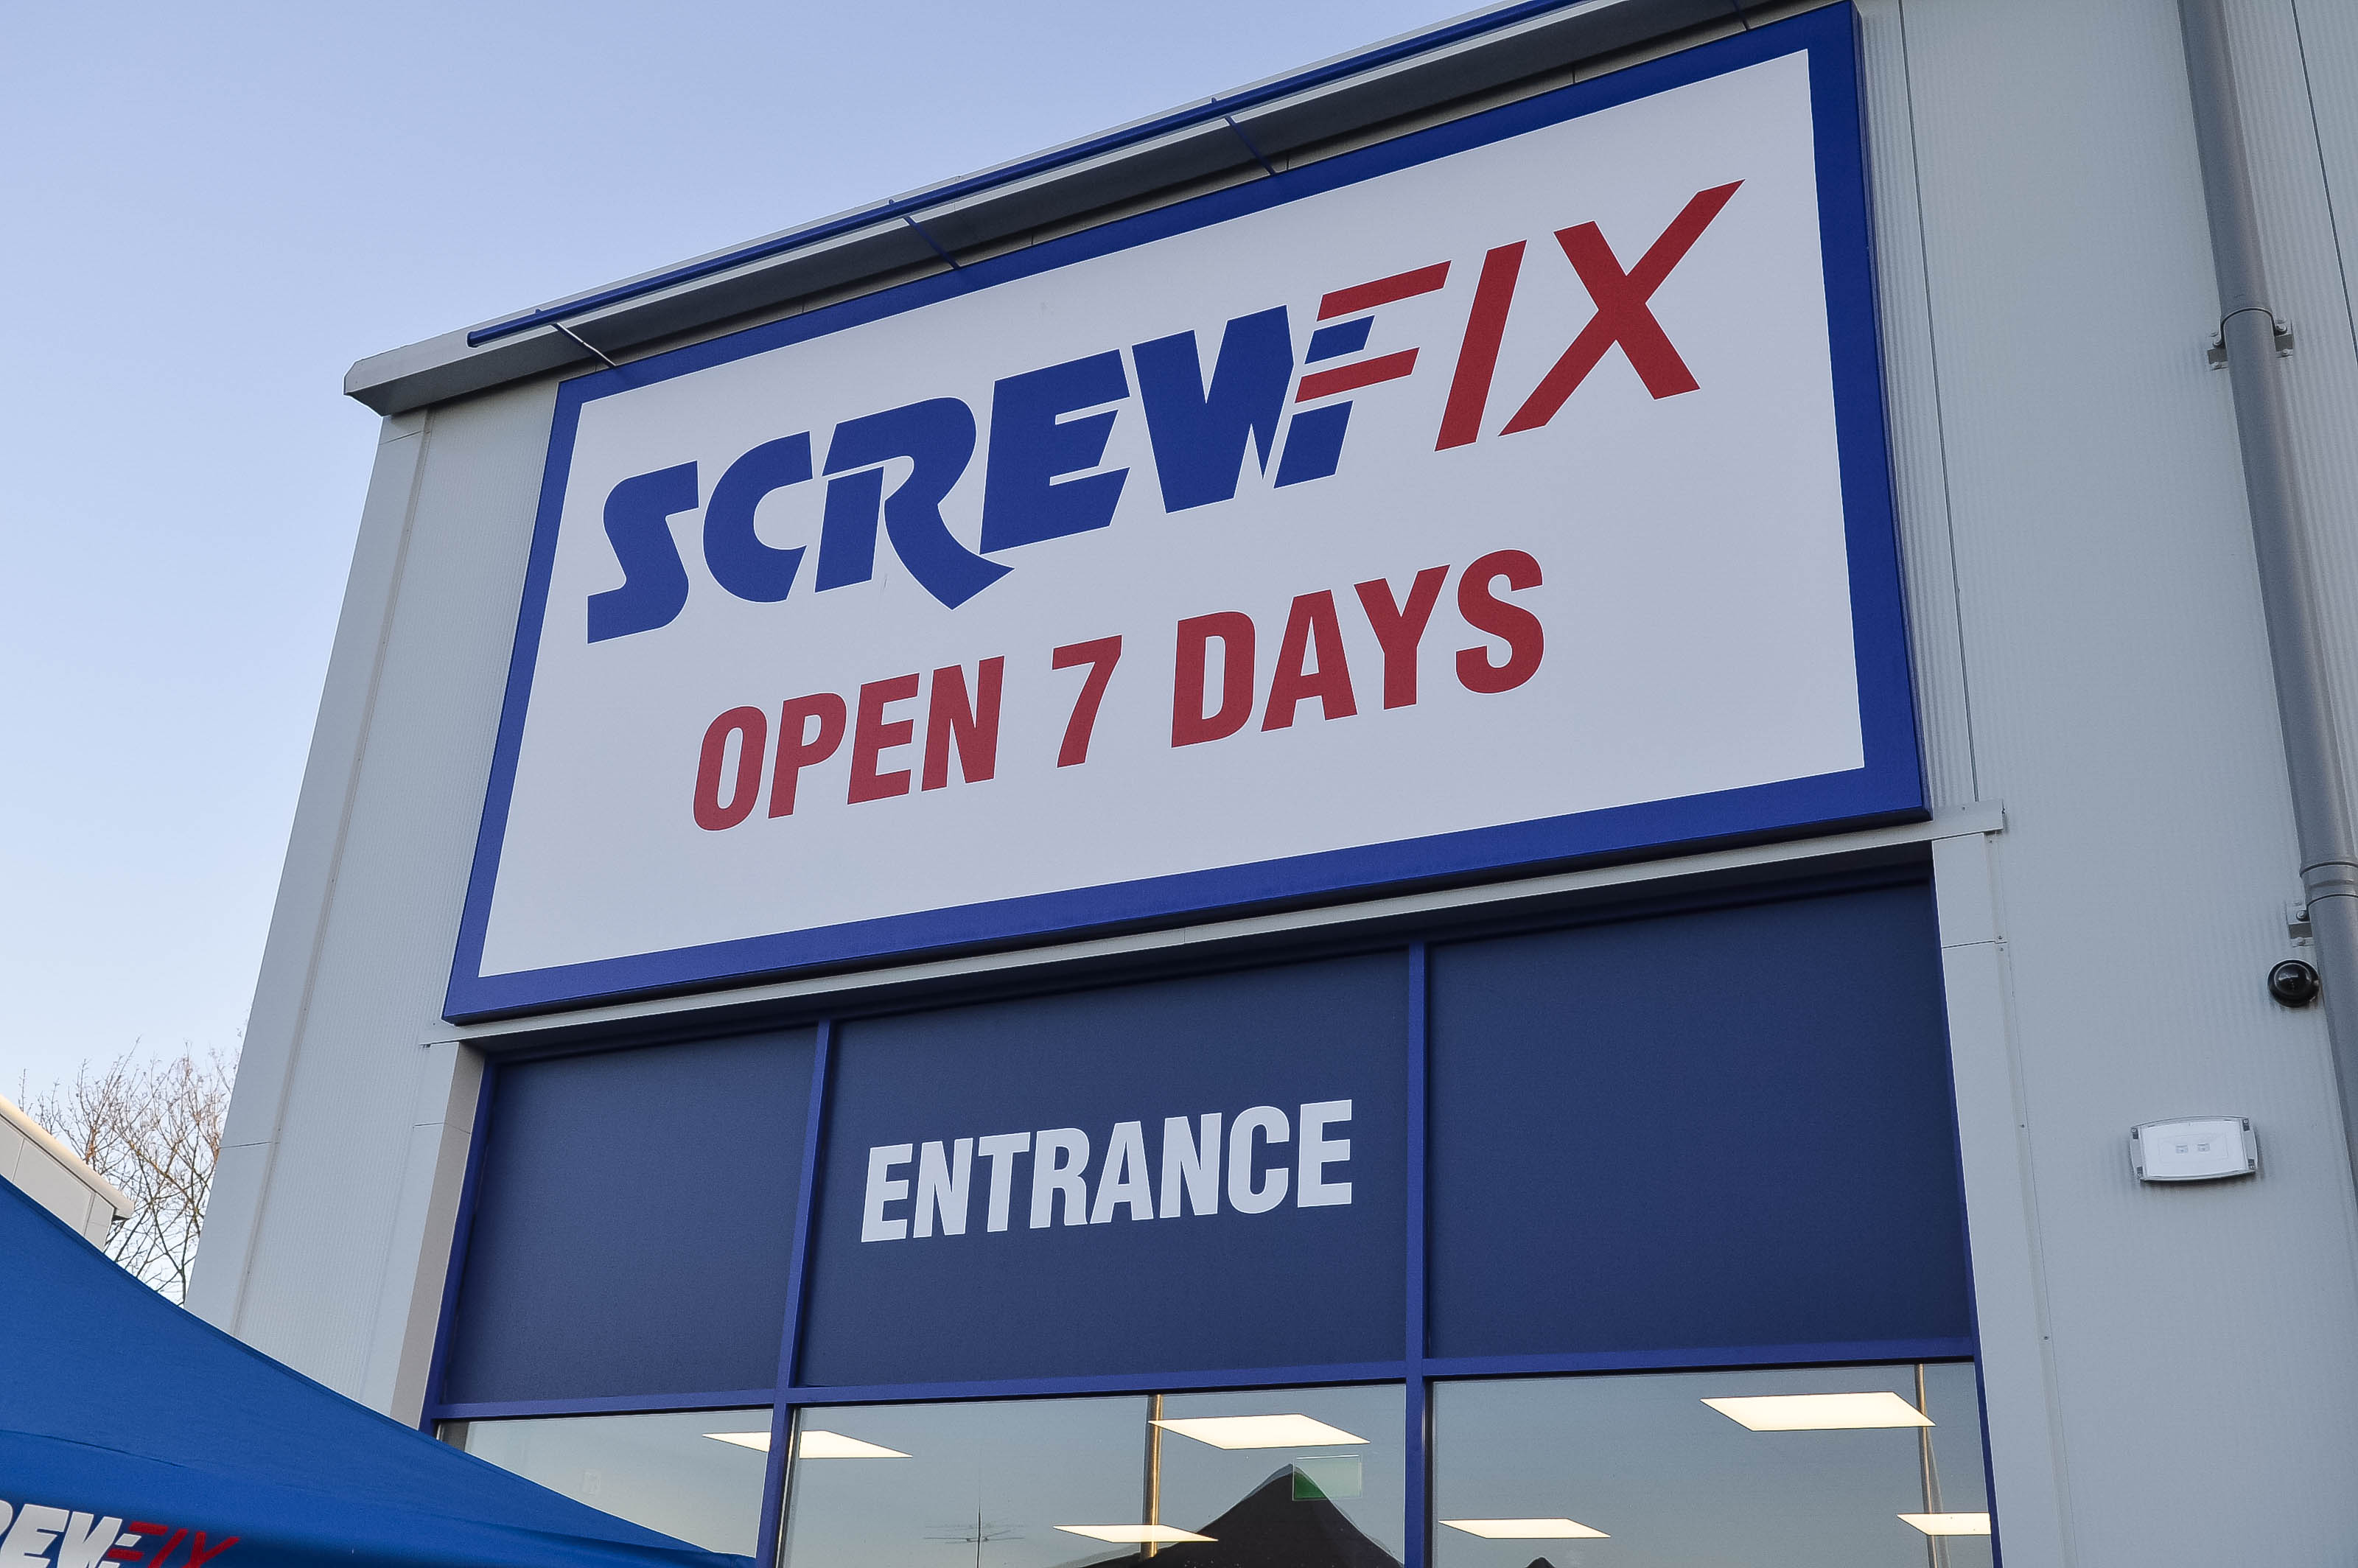 Rubery’s Screwfix store is declared a runaway success